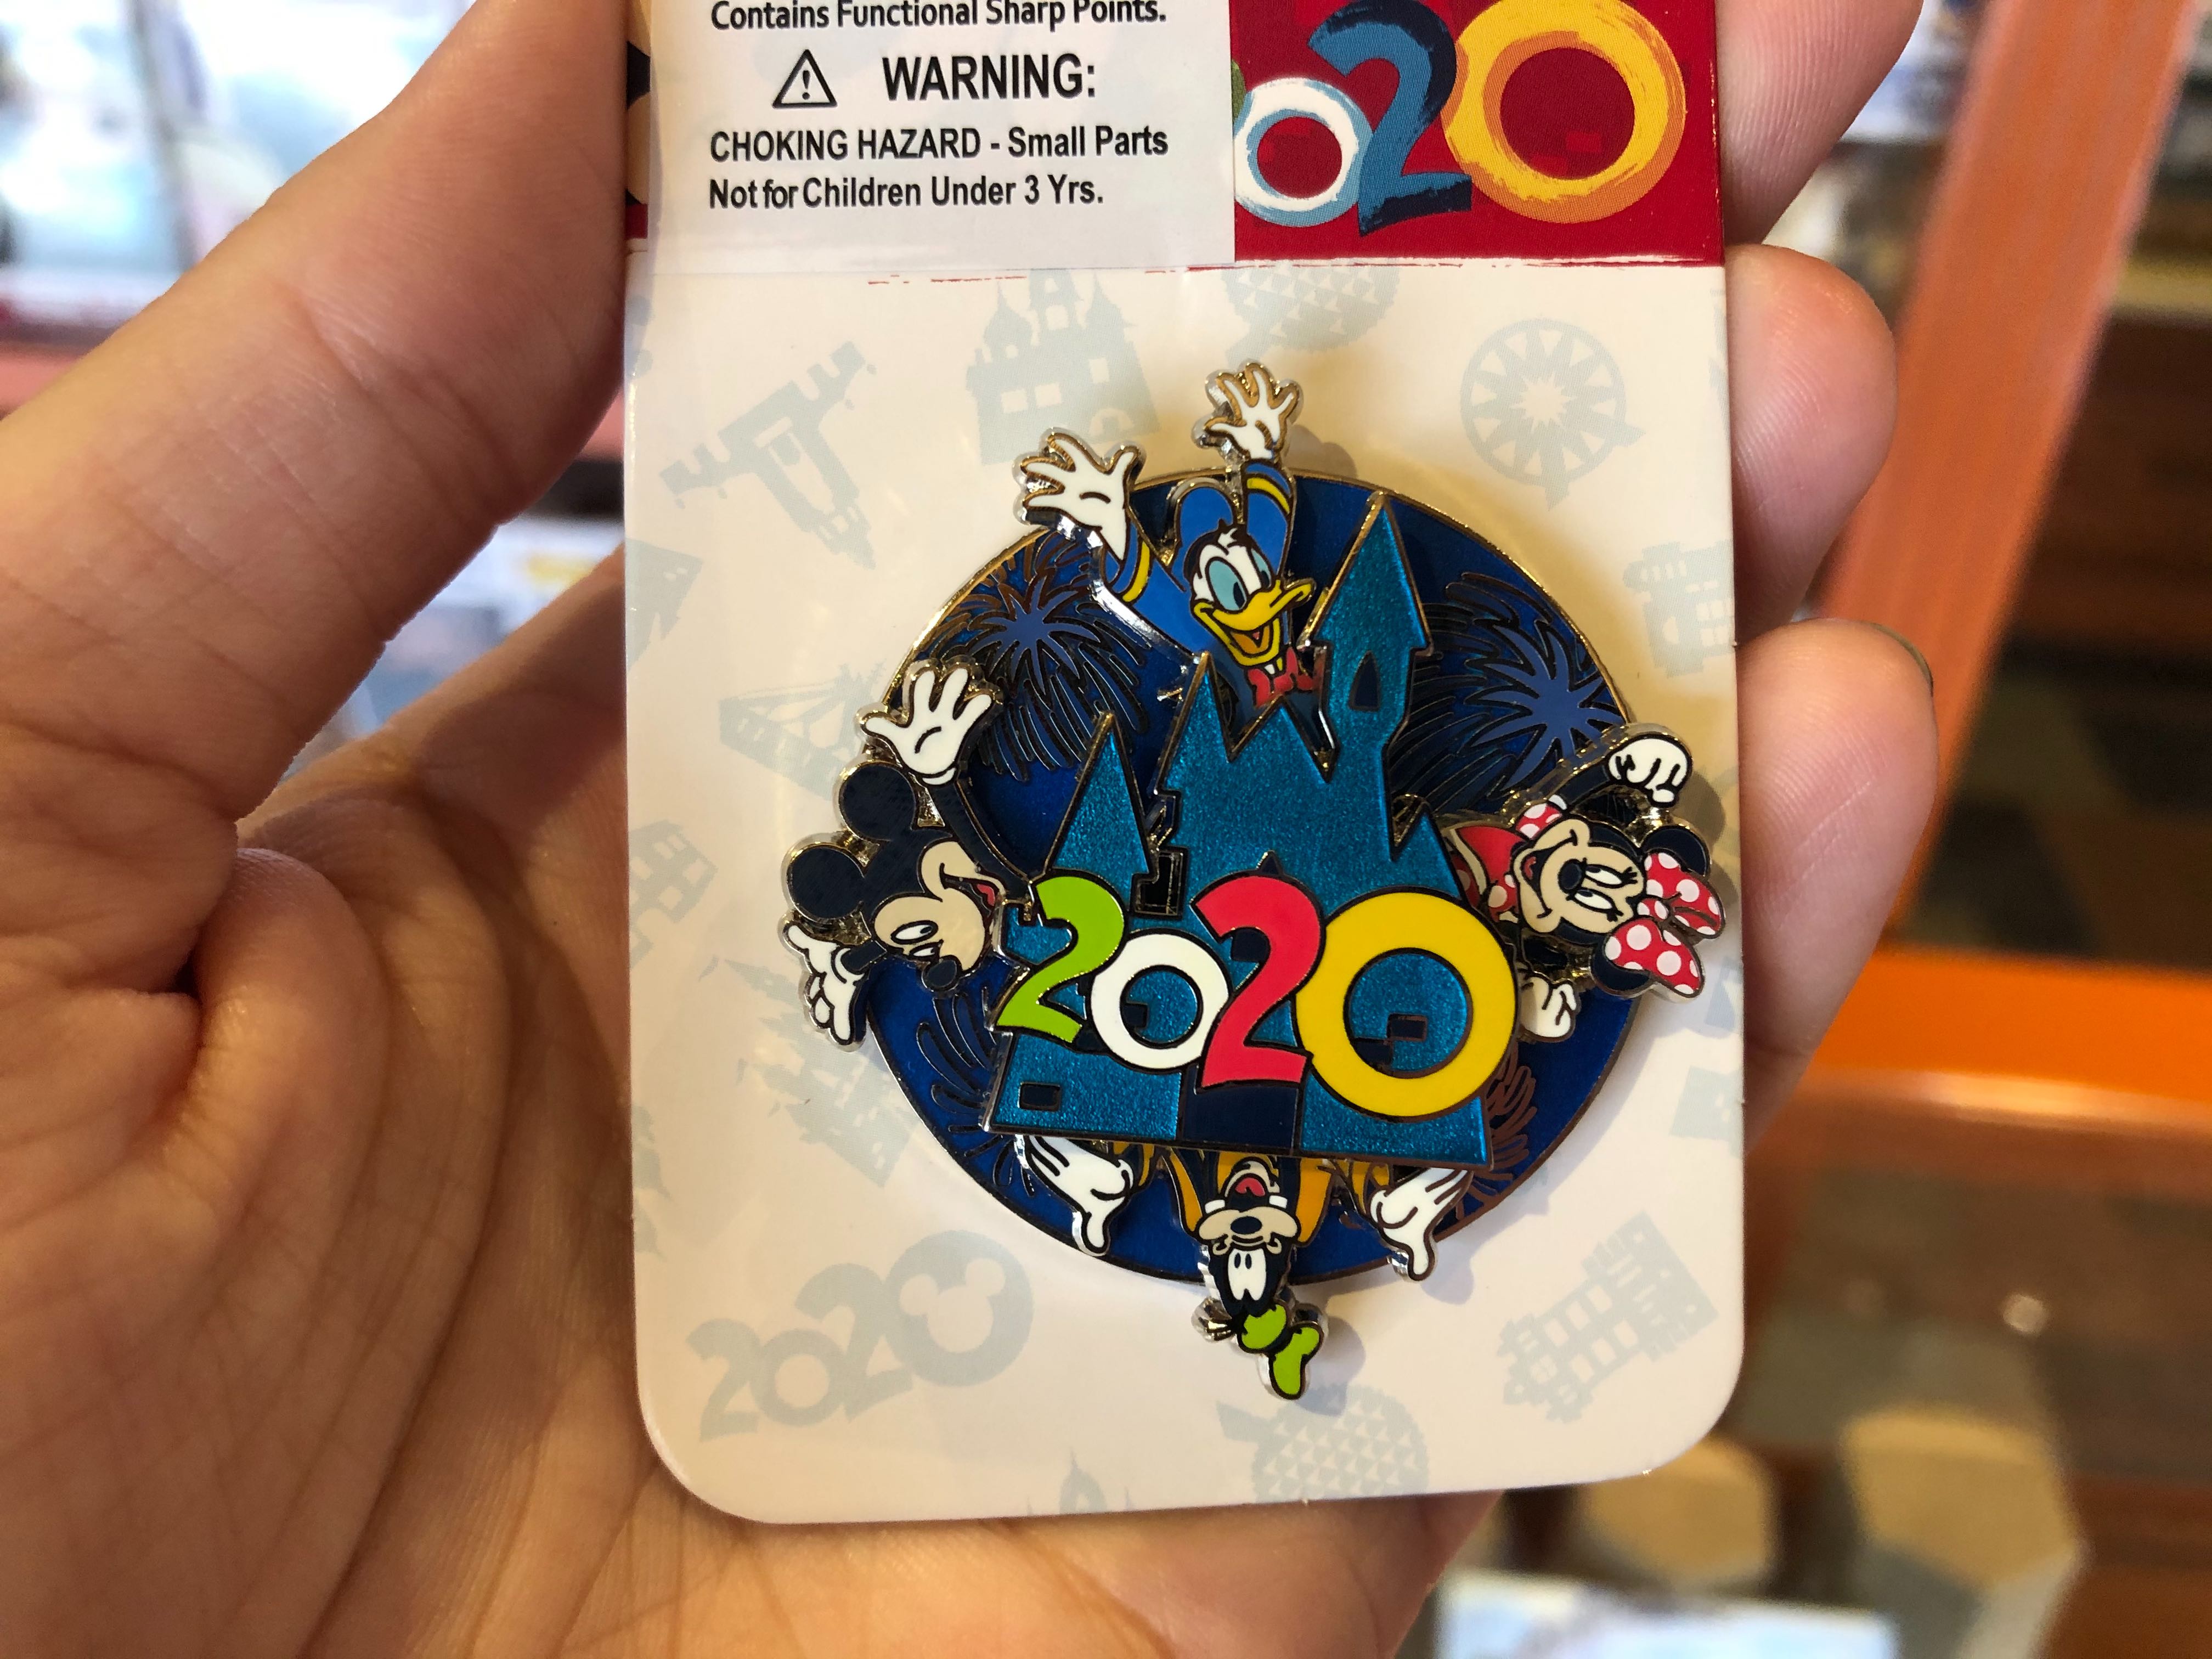 Photos New Park Specific 2020 Logo Trading Pins Debut At Walt Disney